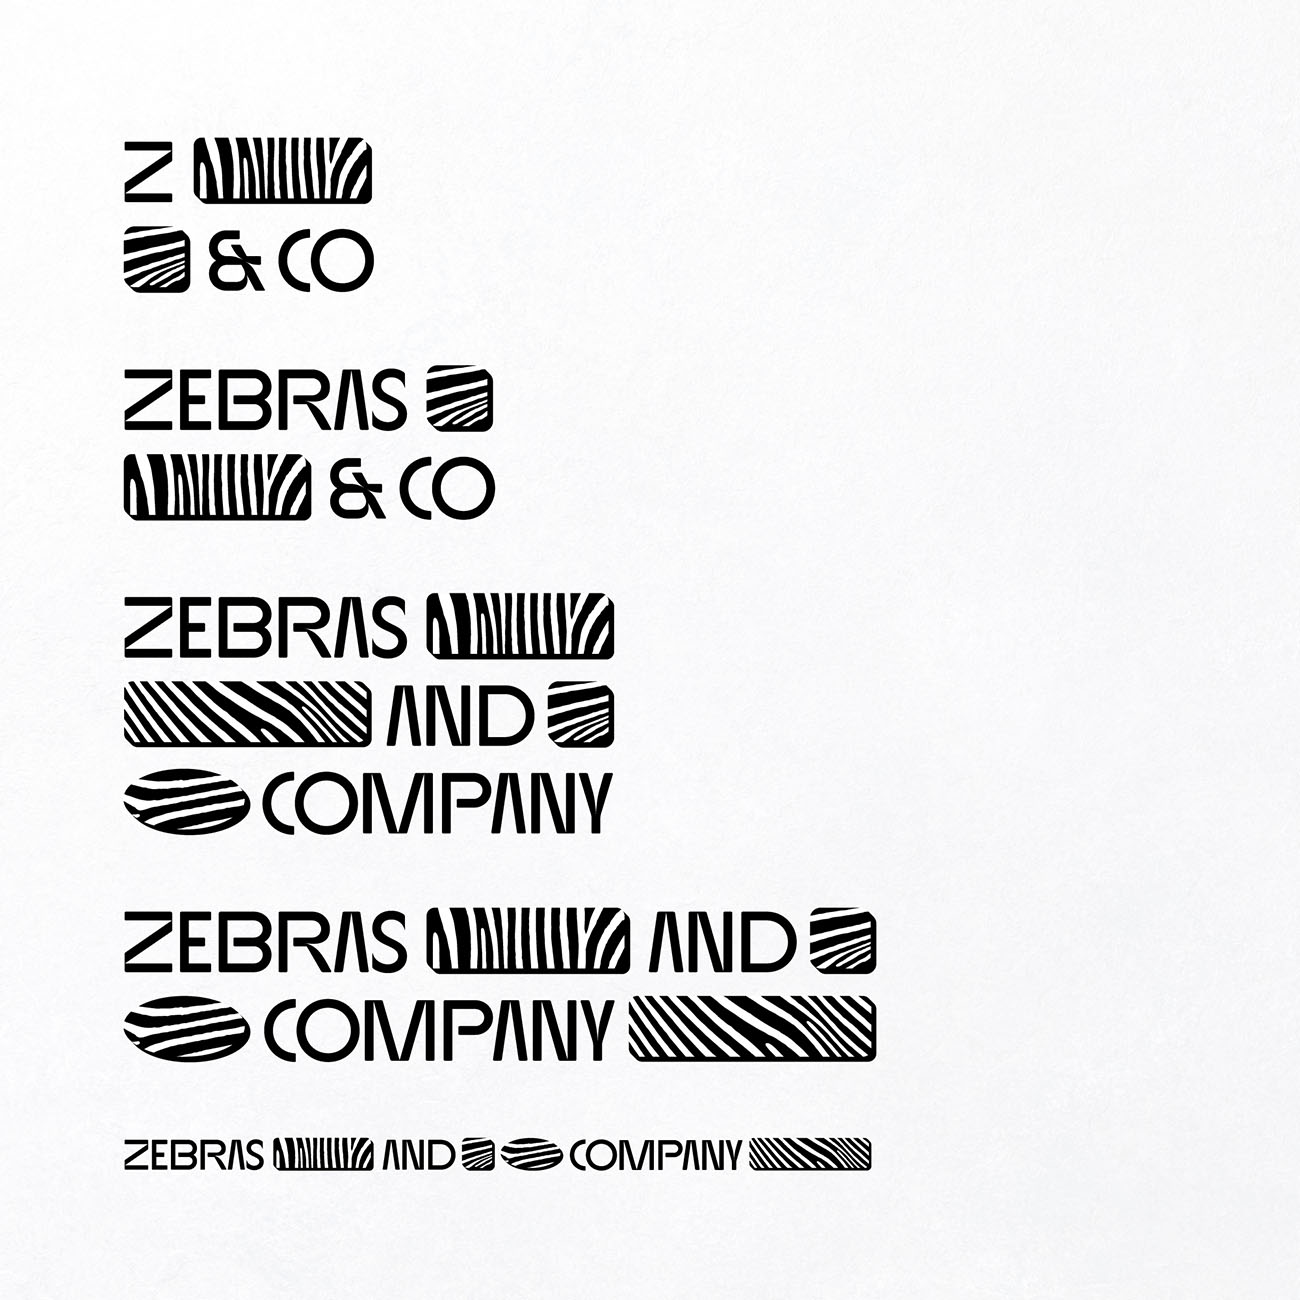 ZEBRAS AND COMPANY